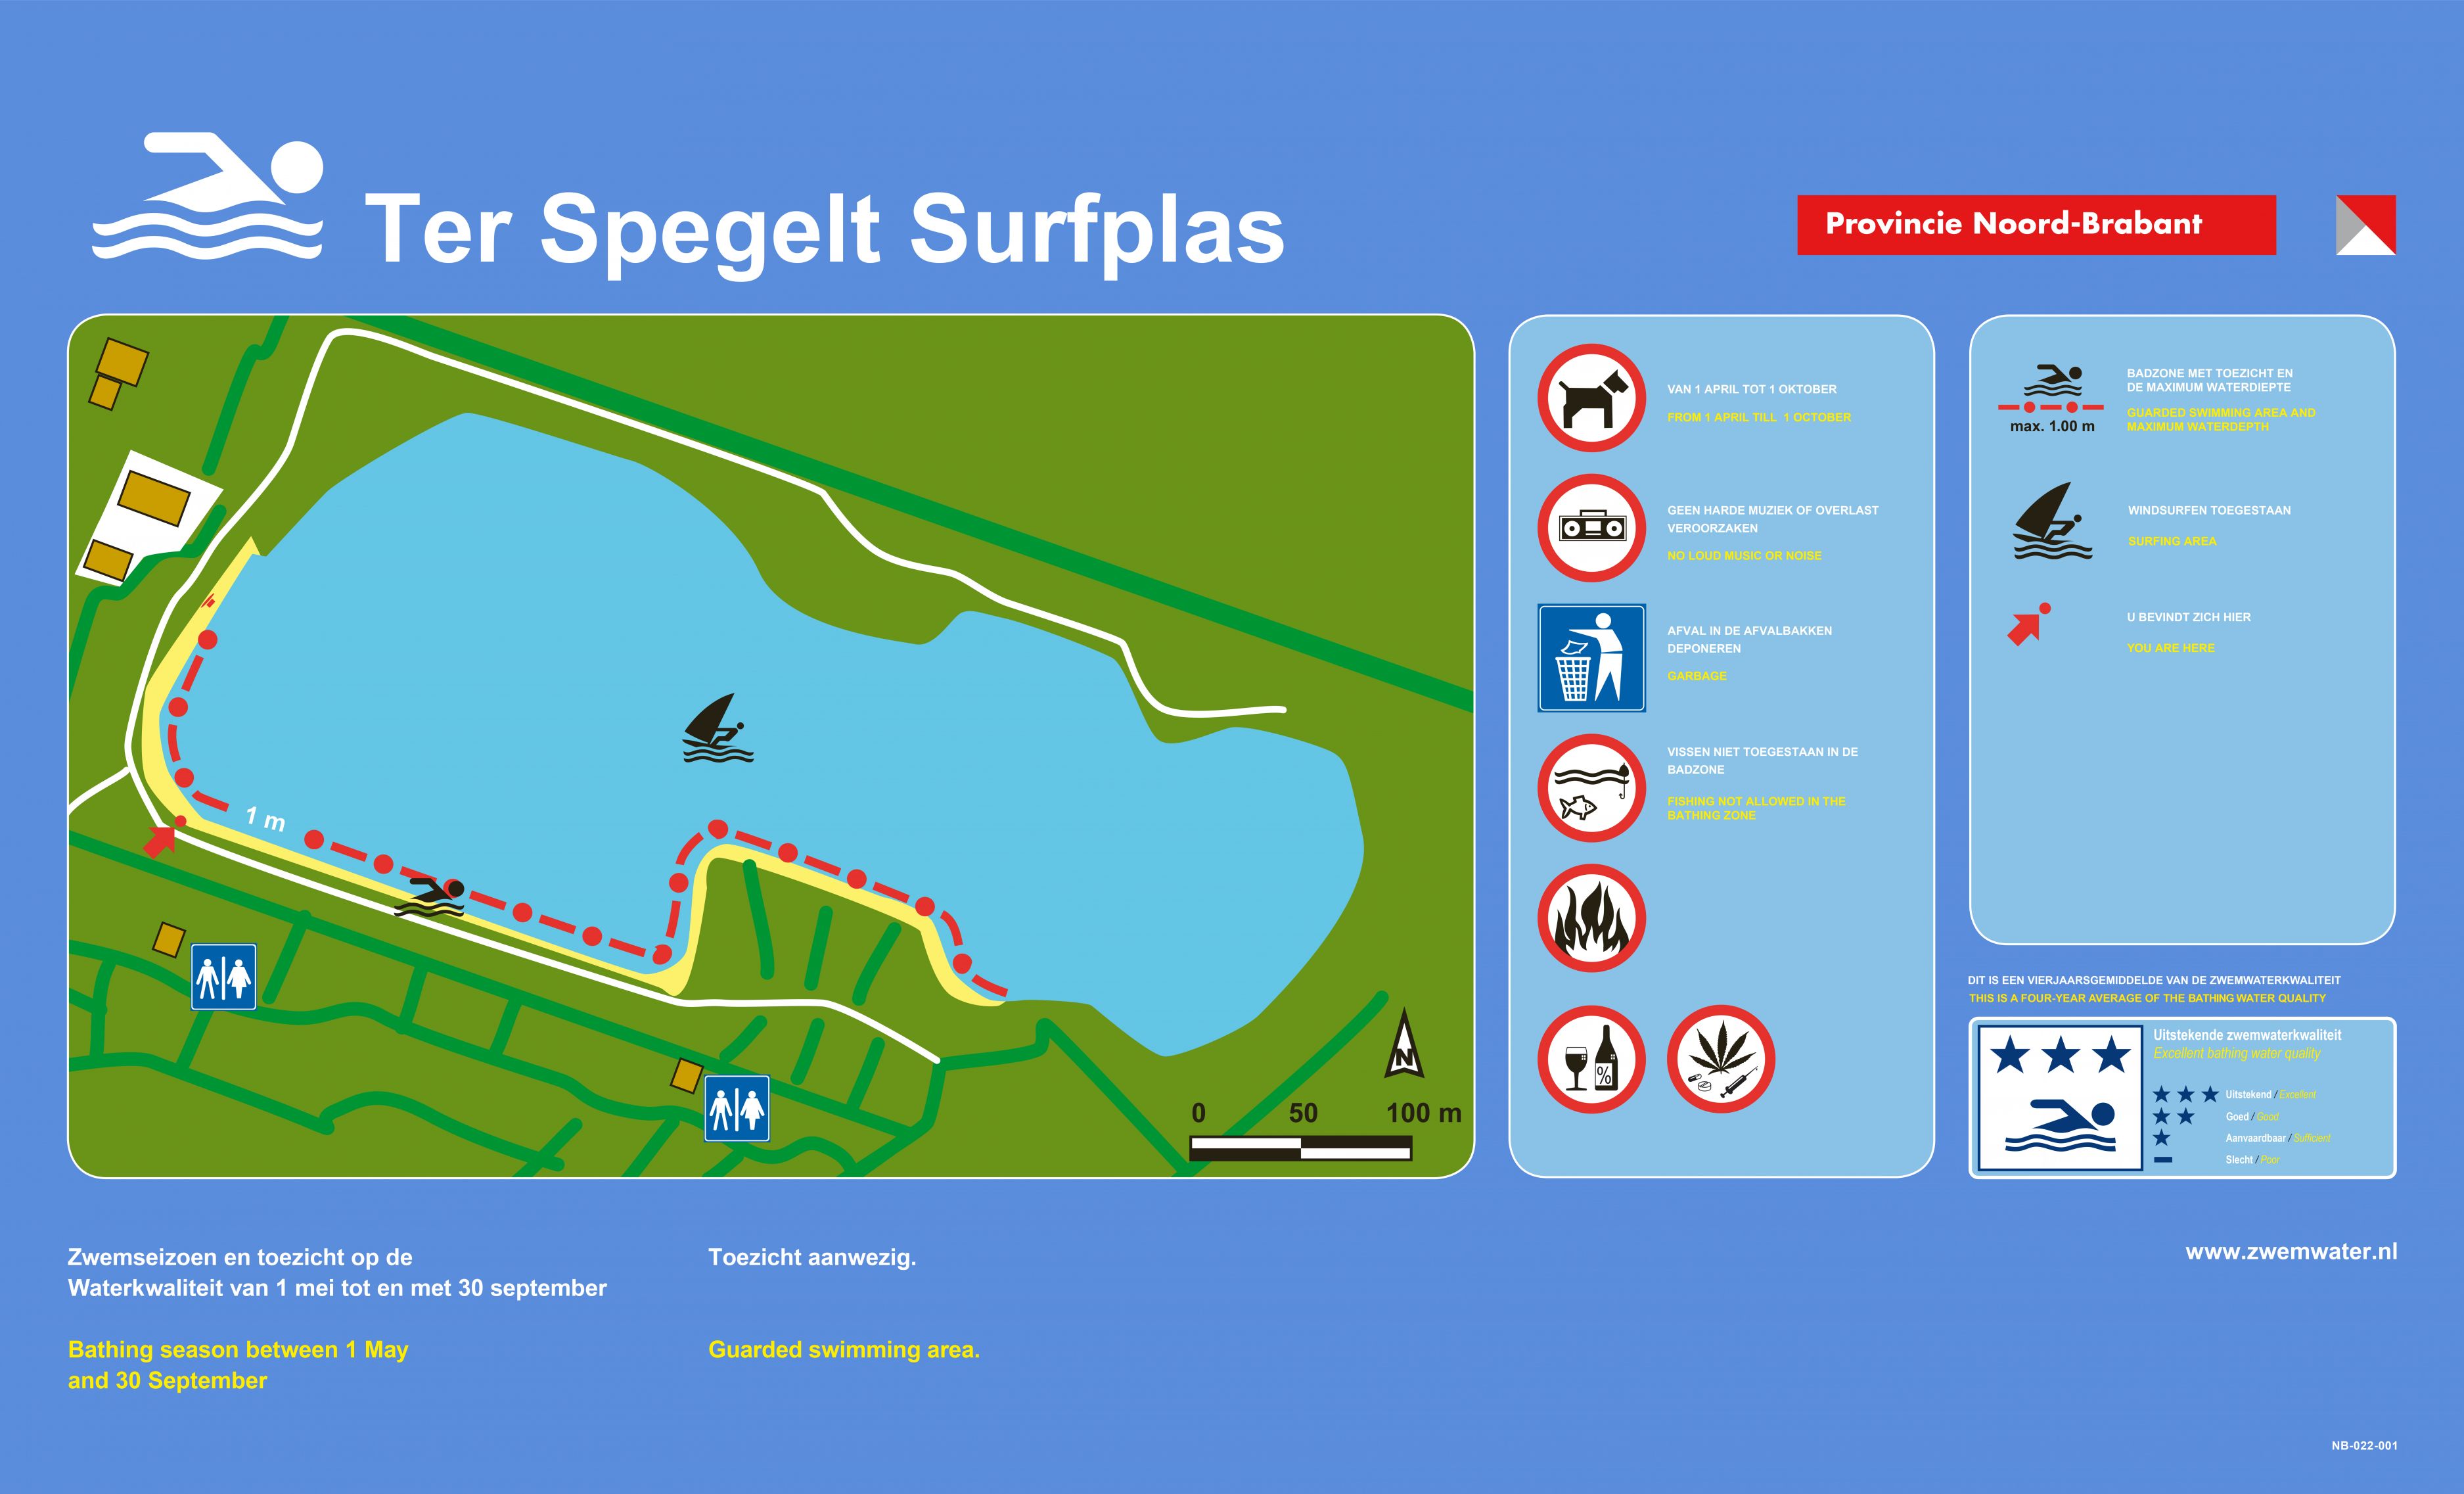 The information board at the swimming location Ter Spegelt Surfplas